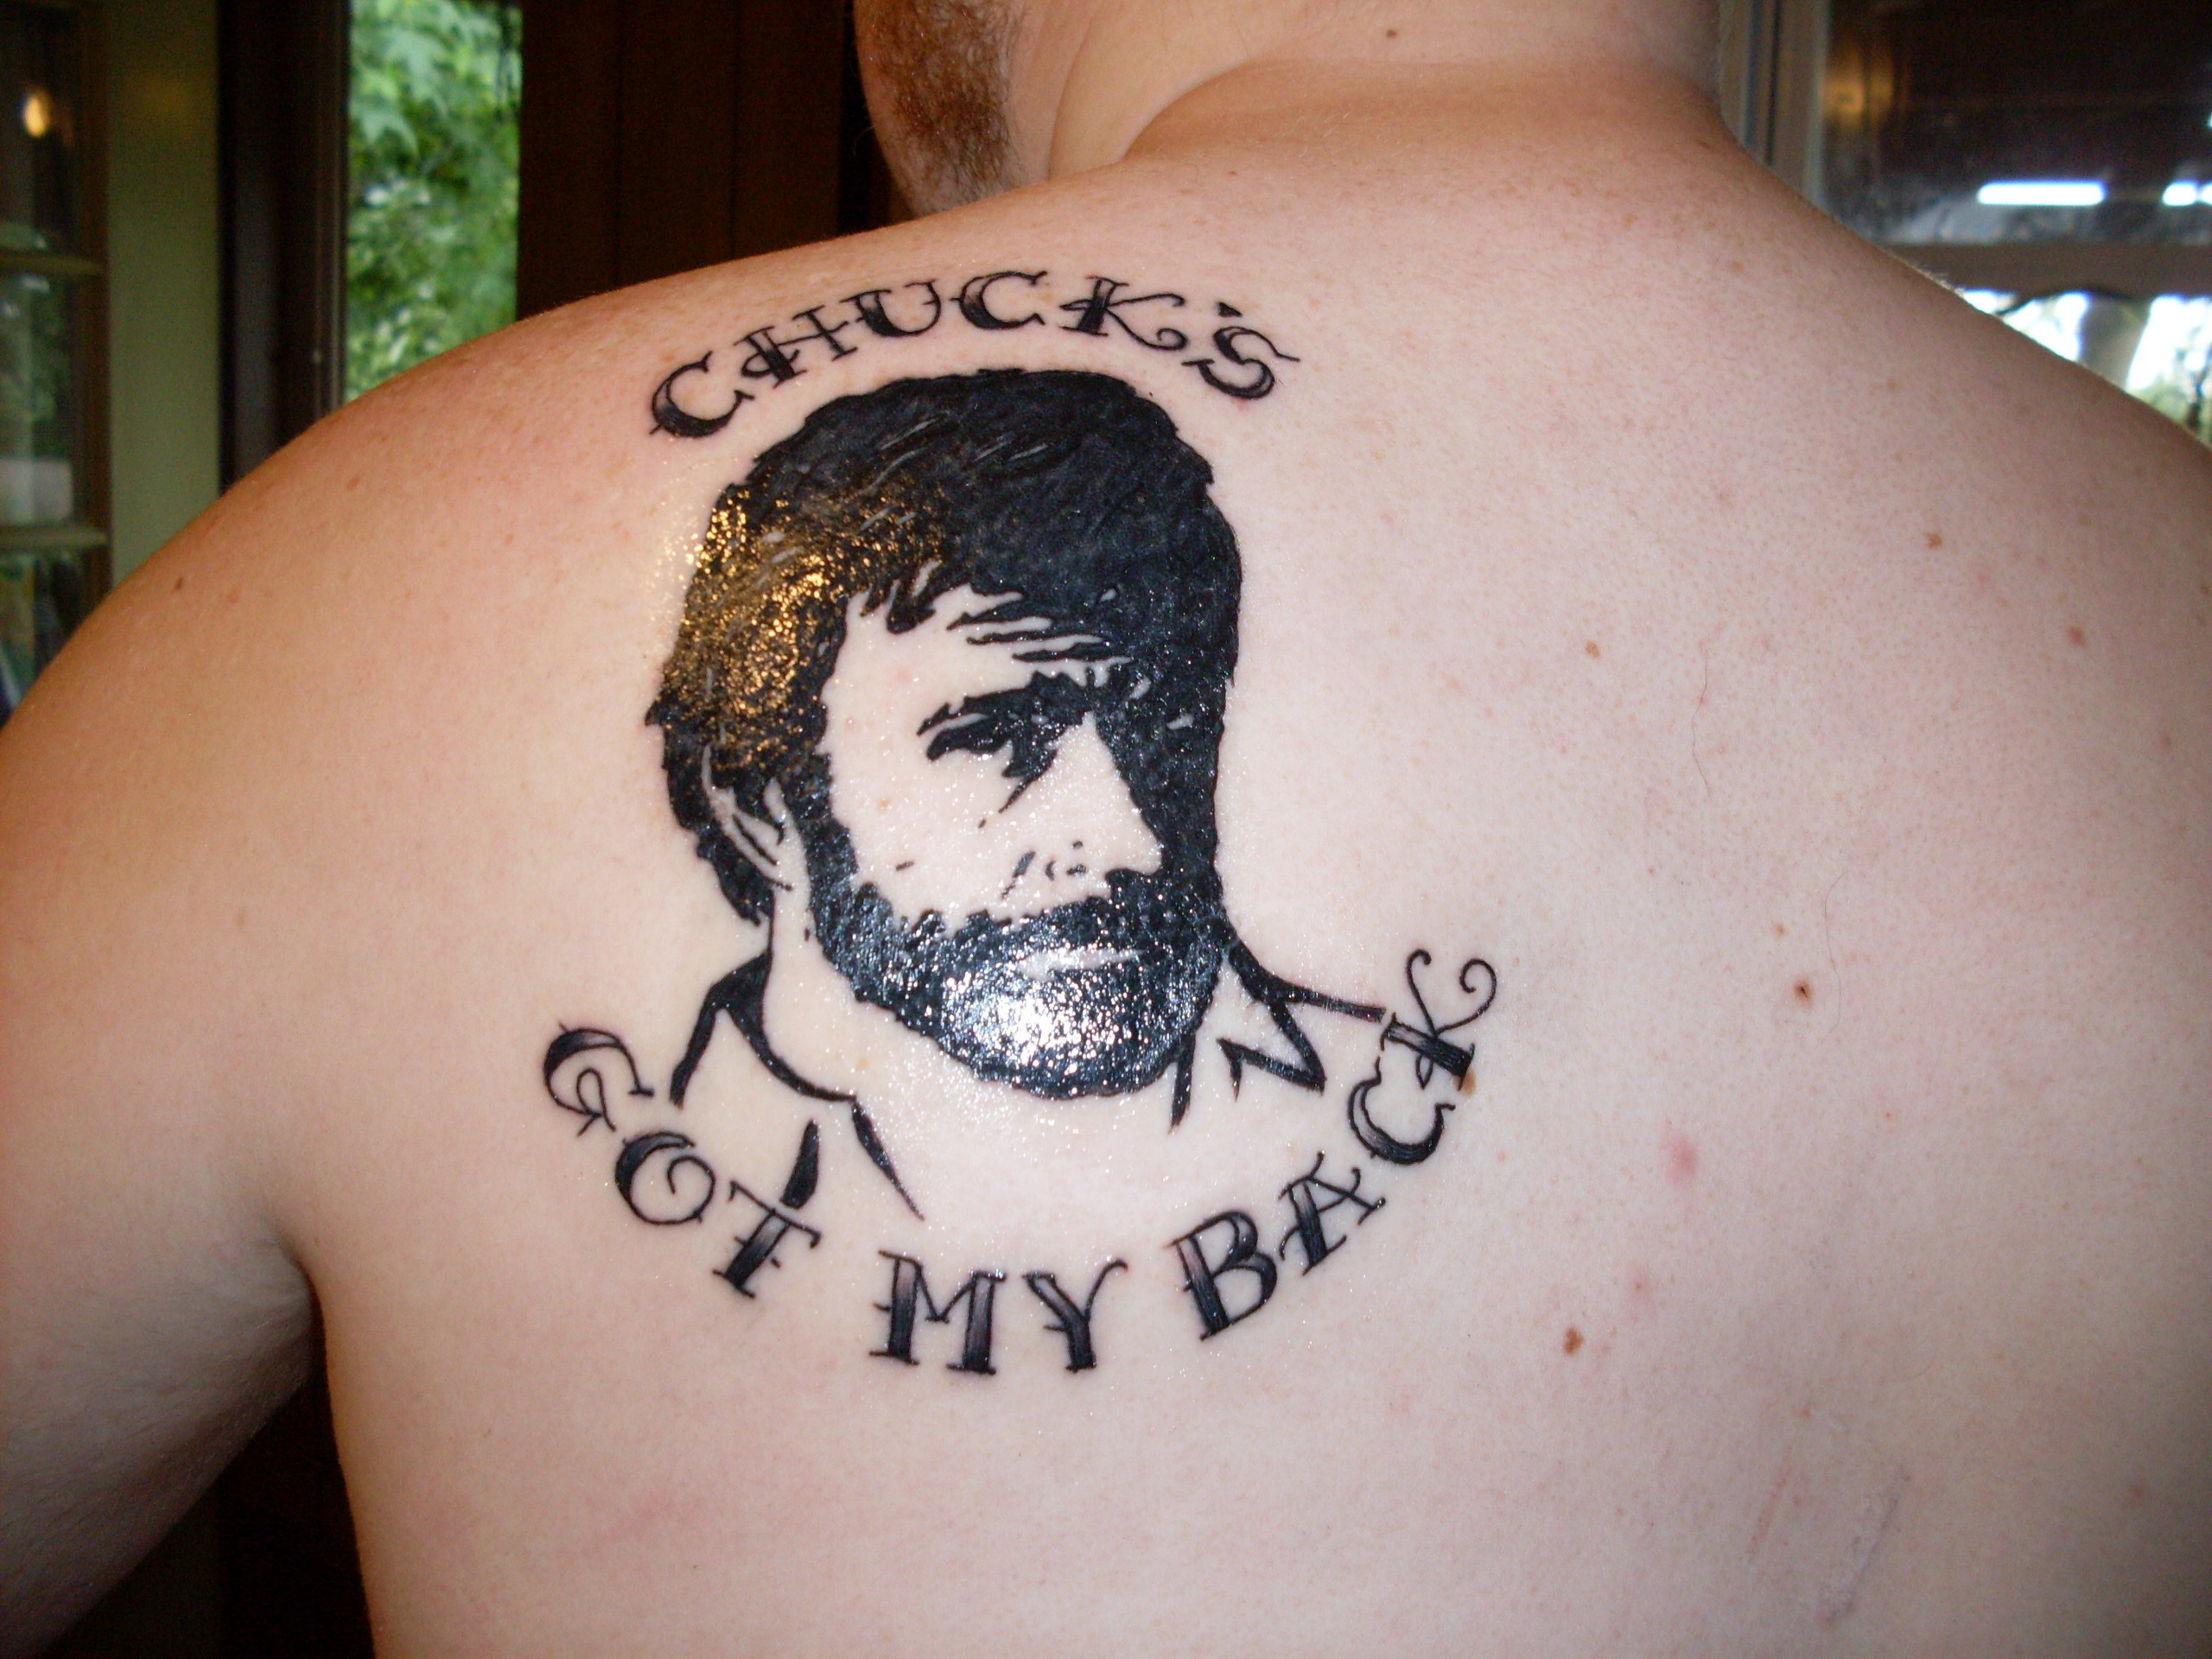 chuck's got my back